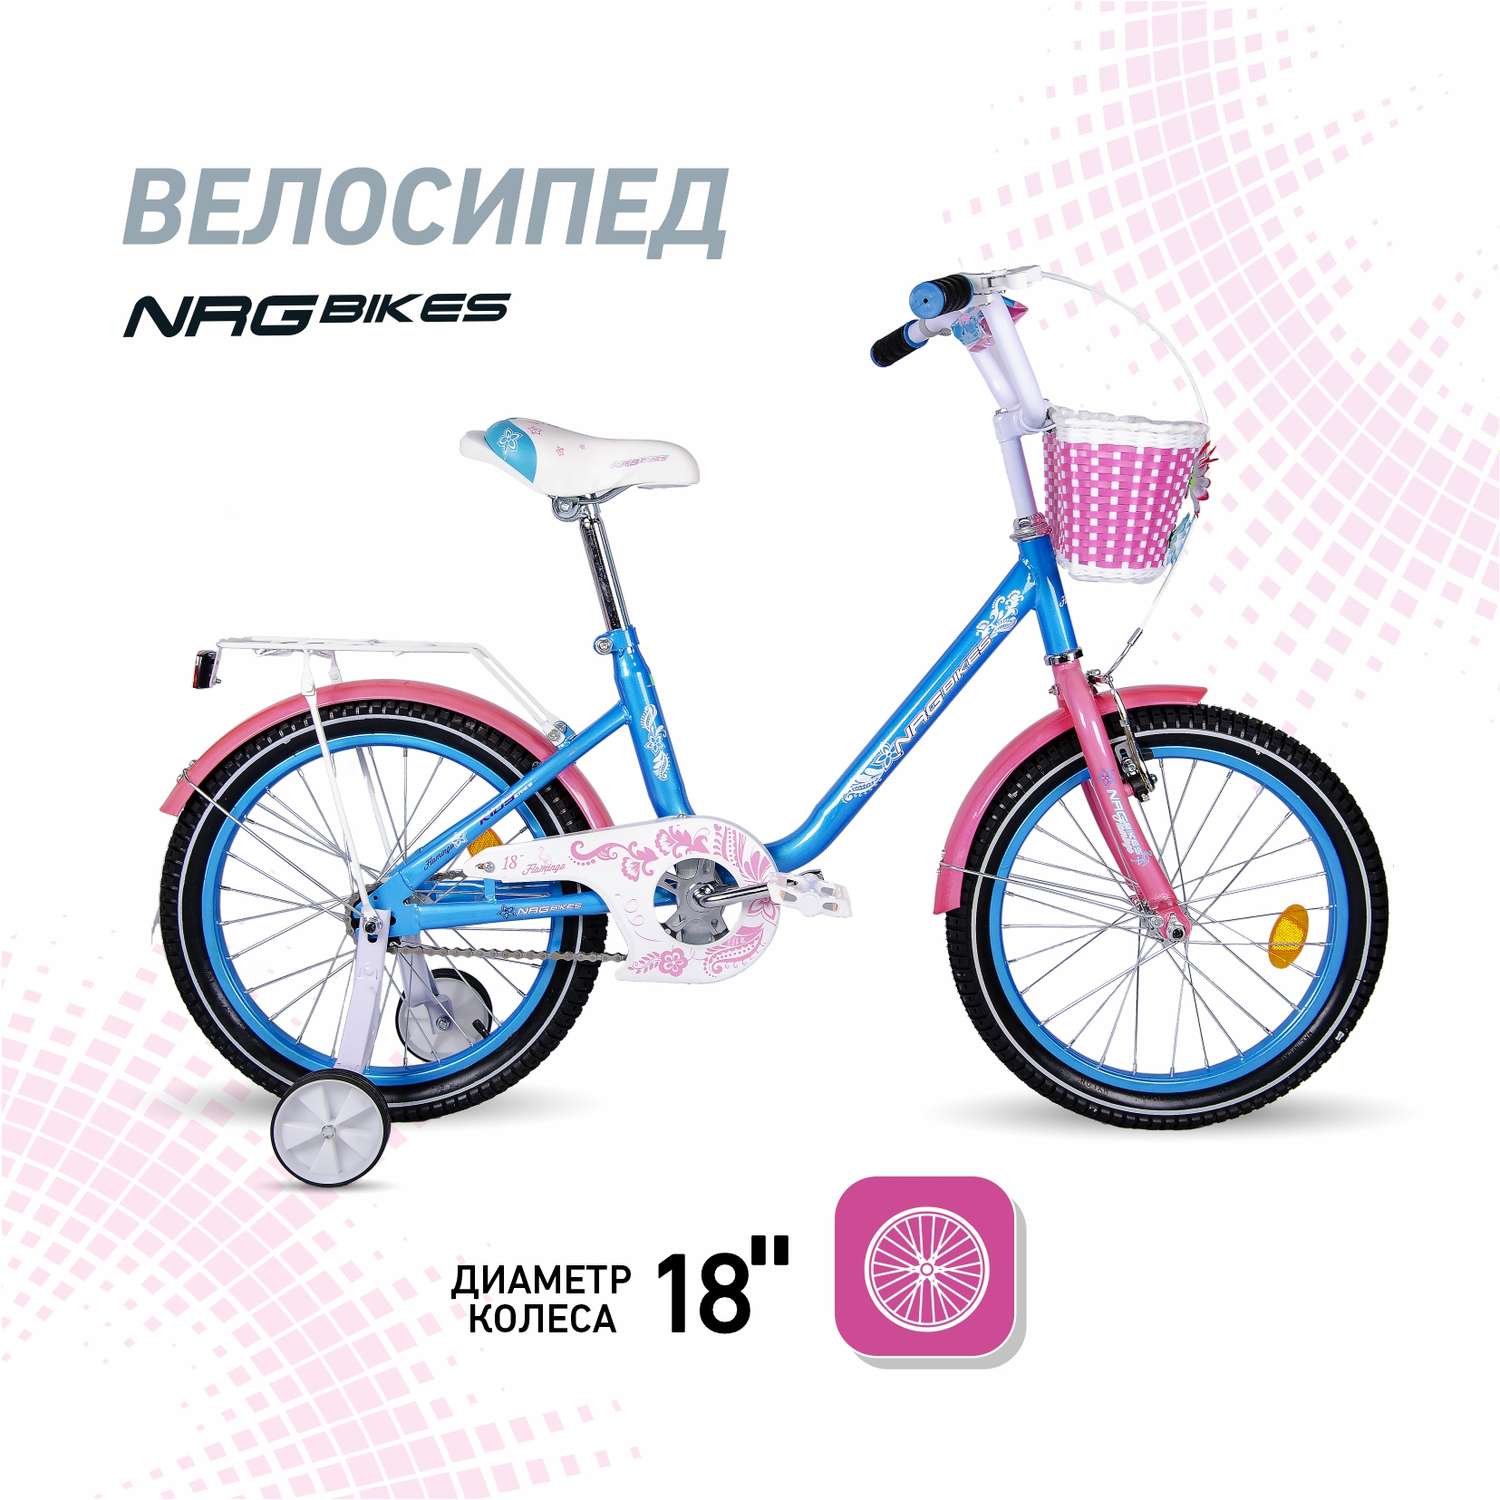 Велосипед NRG BIKES FLAMINGO 18 blue-pink - фото 1